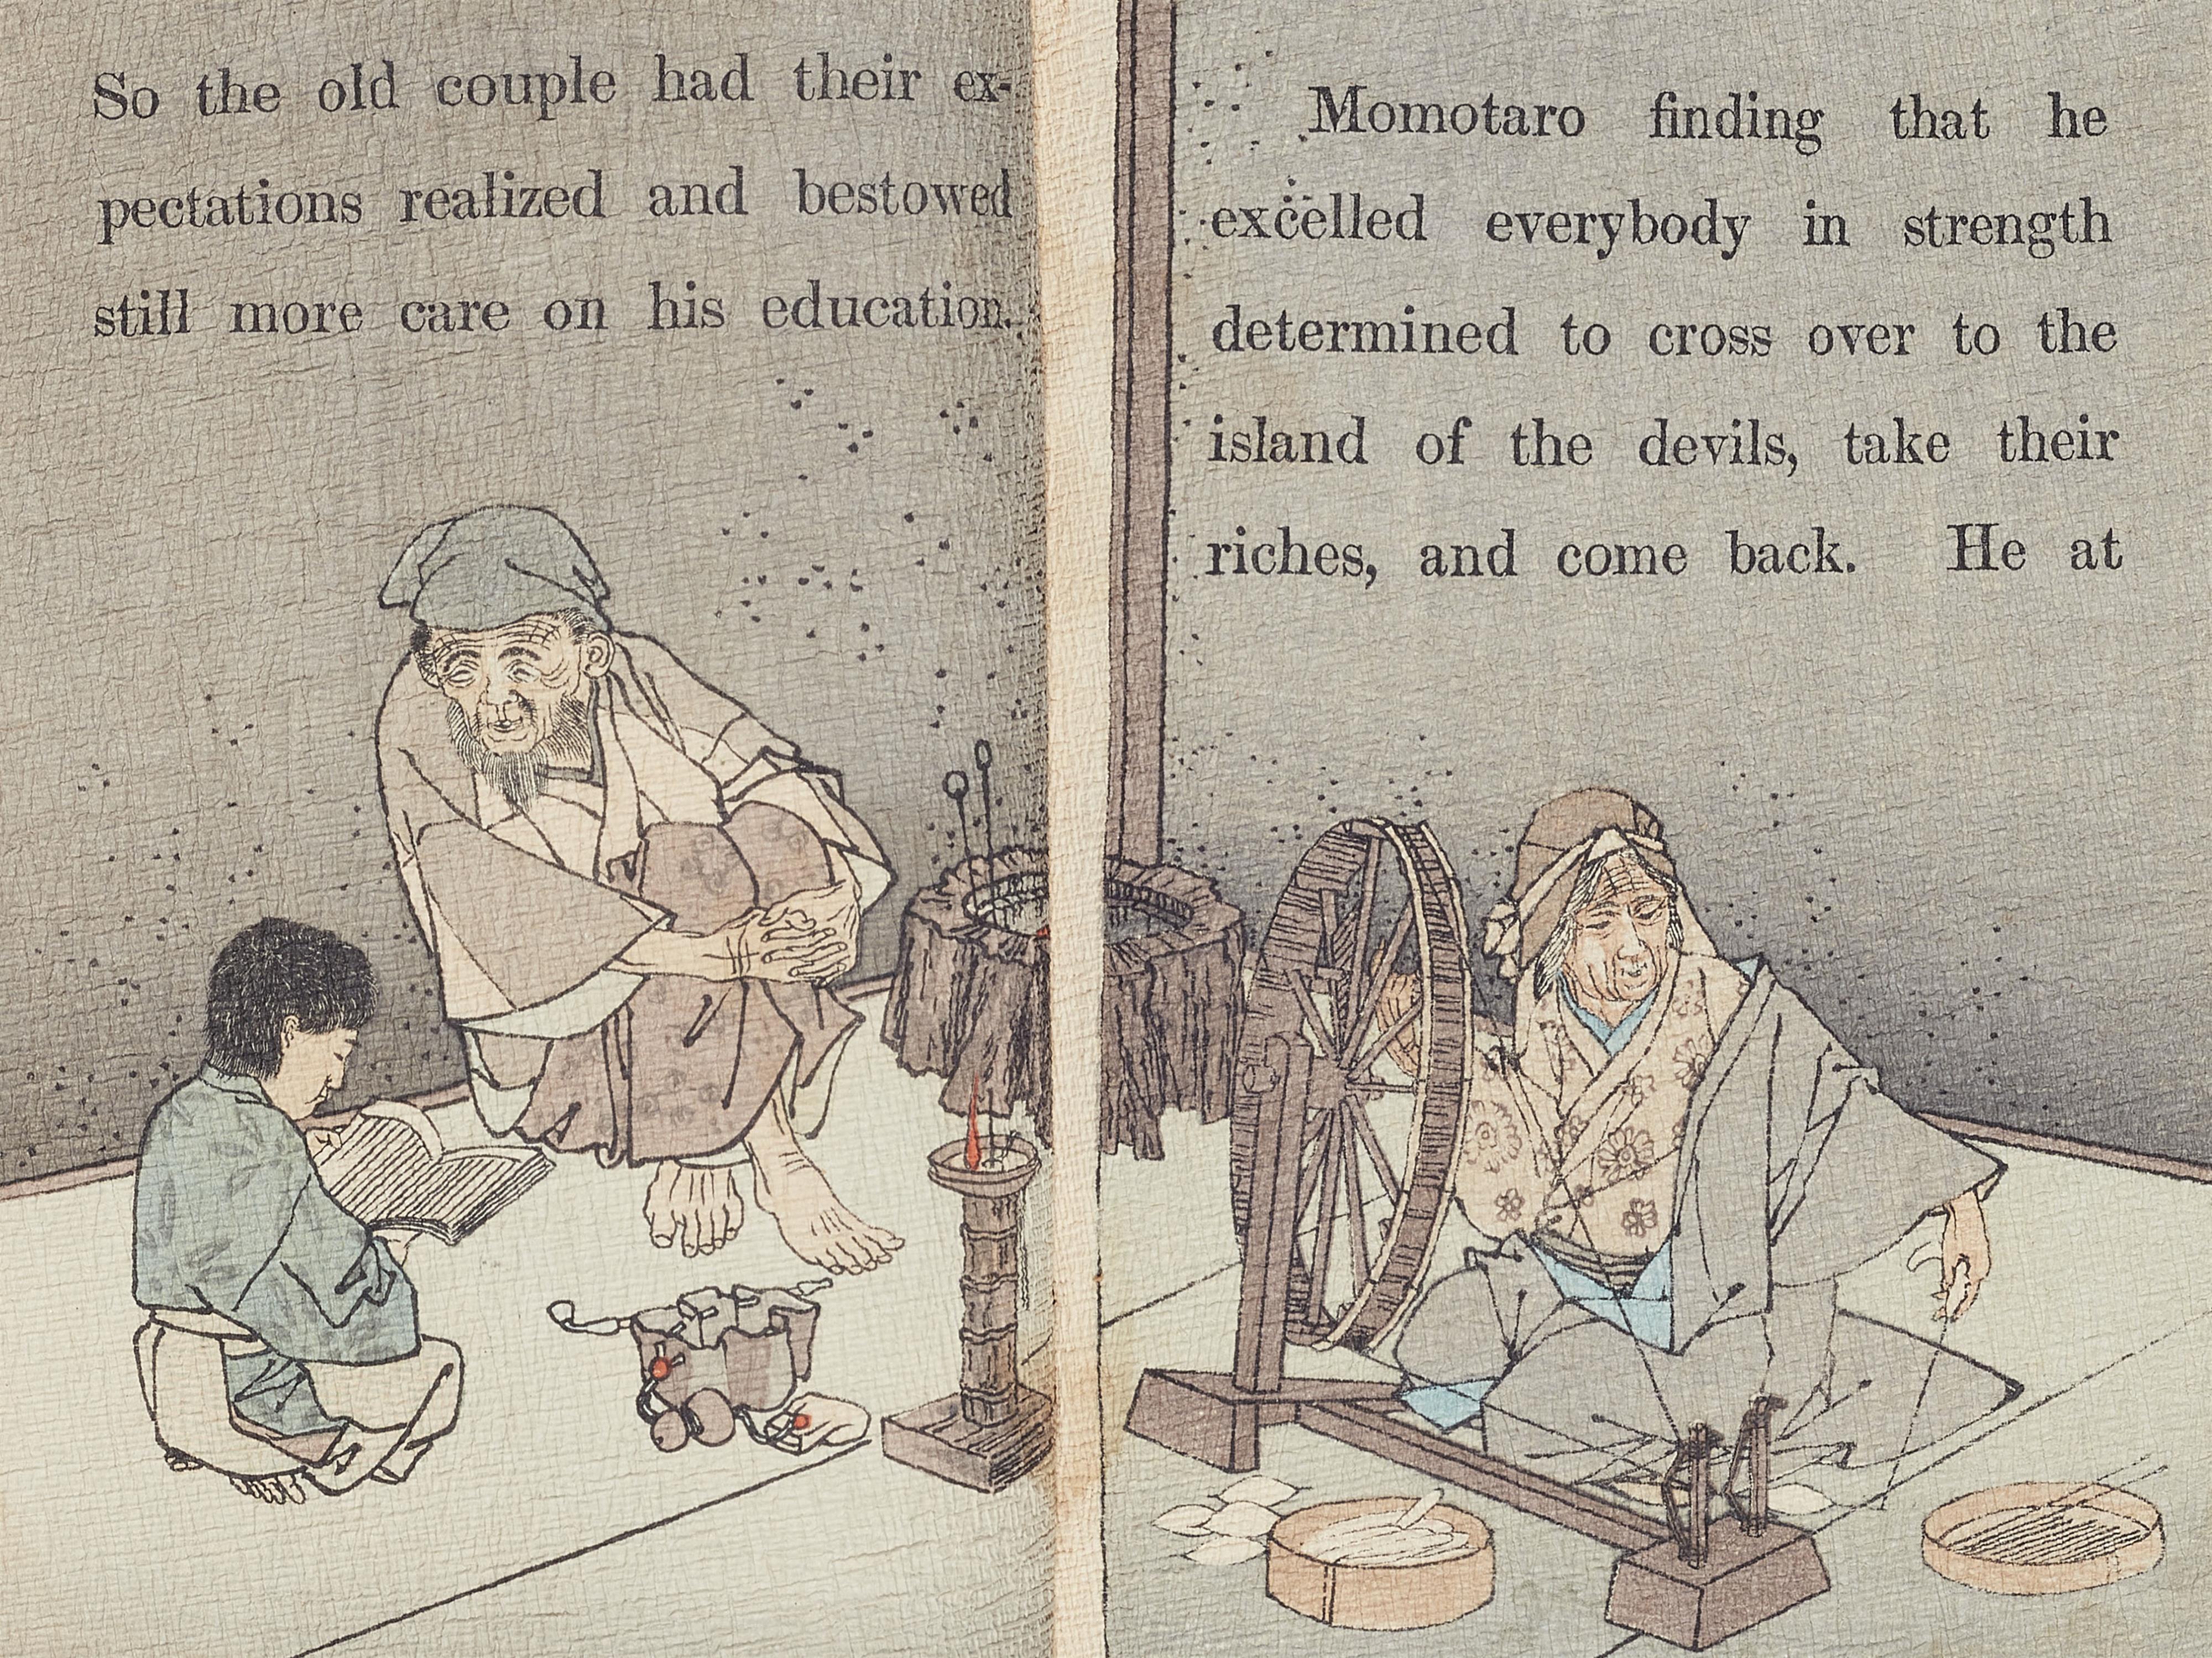 Ogata Gekko - Ten illustrated books in English and Dutch - image-12